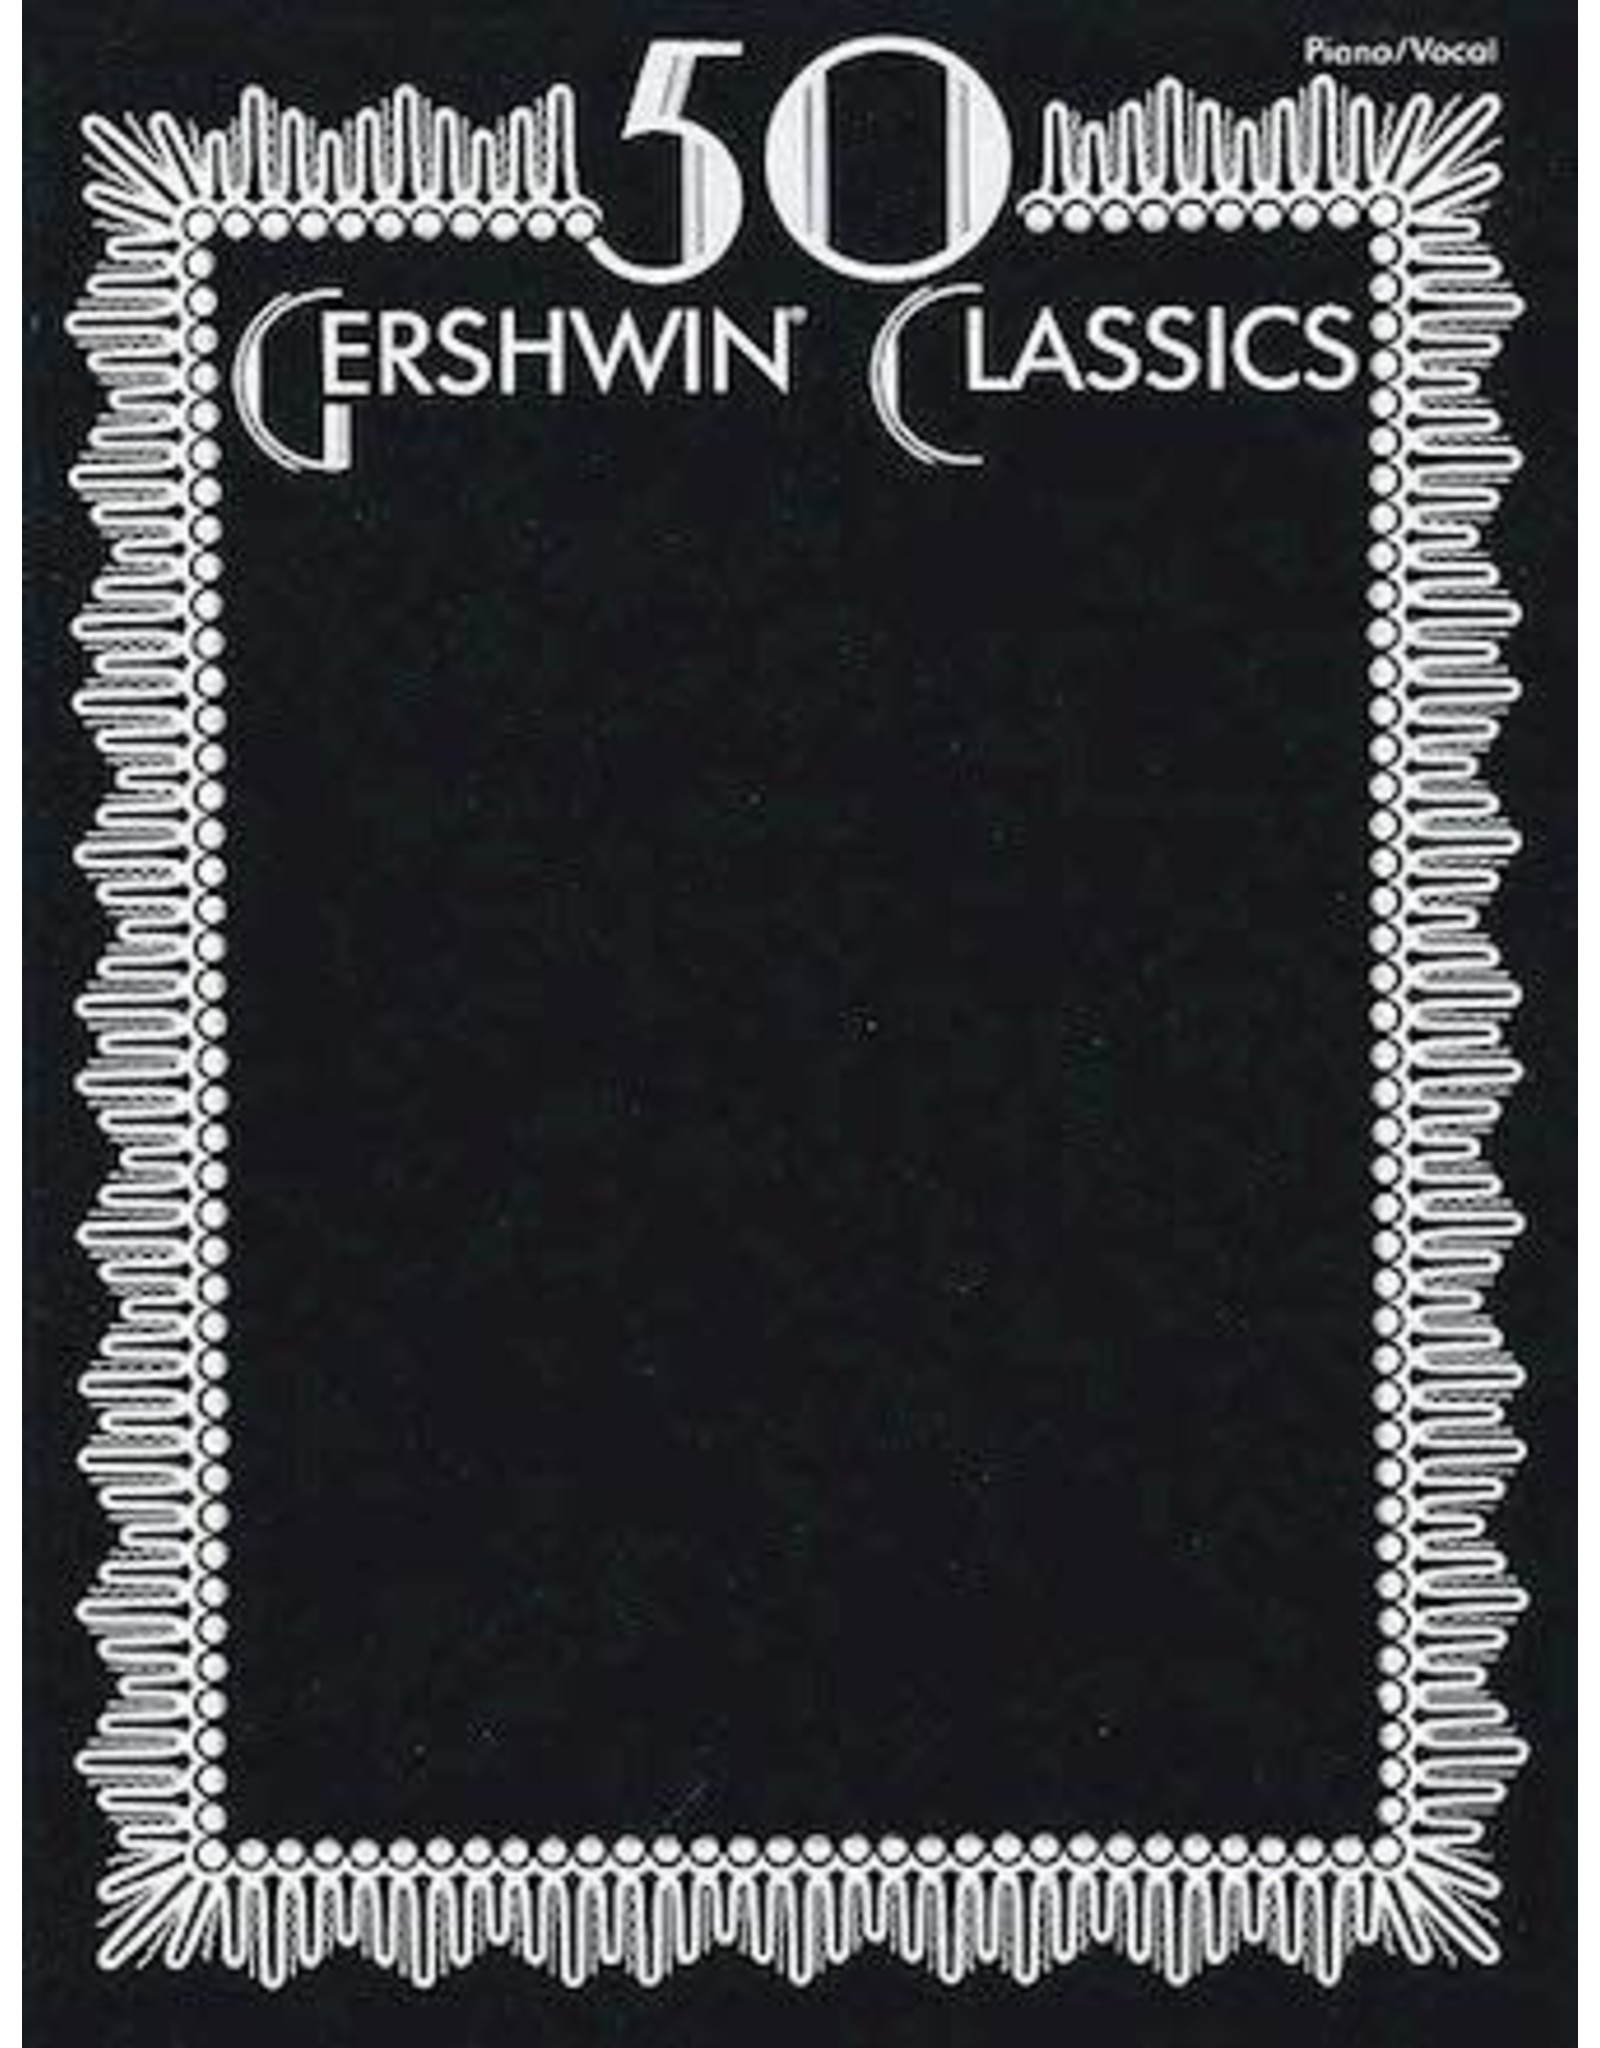 Hal Leonard 50 Gershwin Classics - George Gershwin and Ira Gershwin Piano Vocal